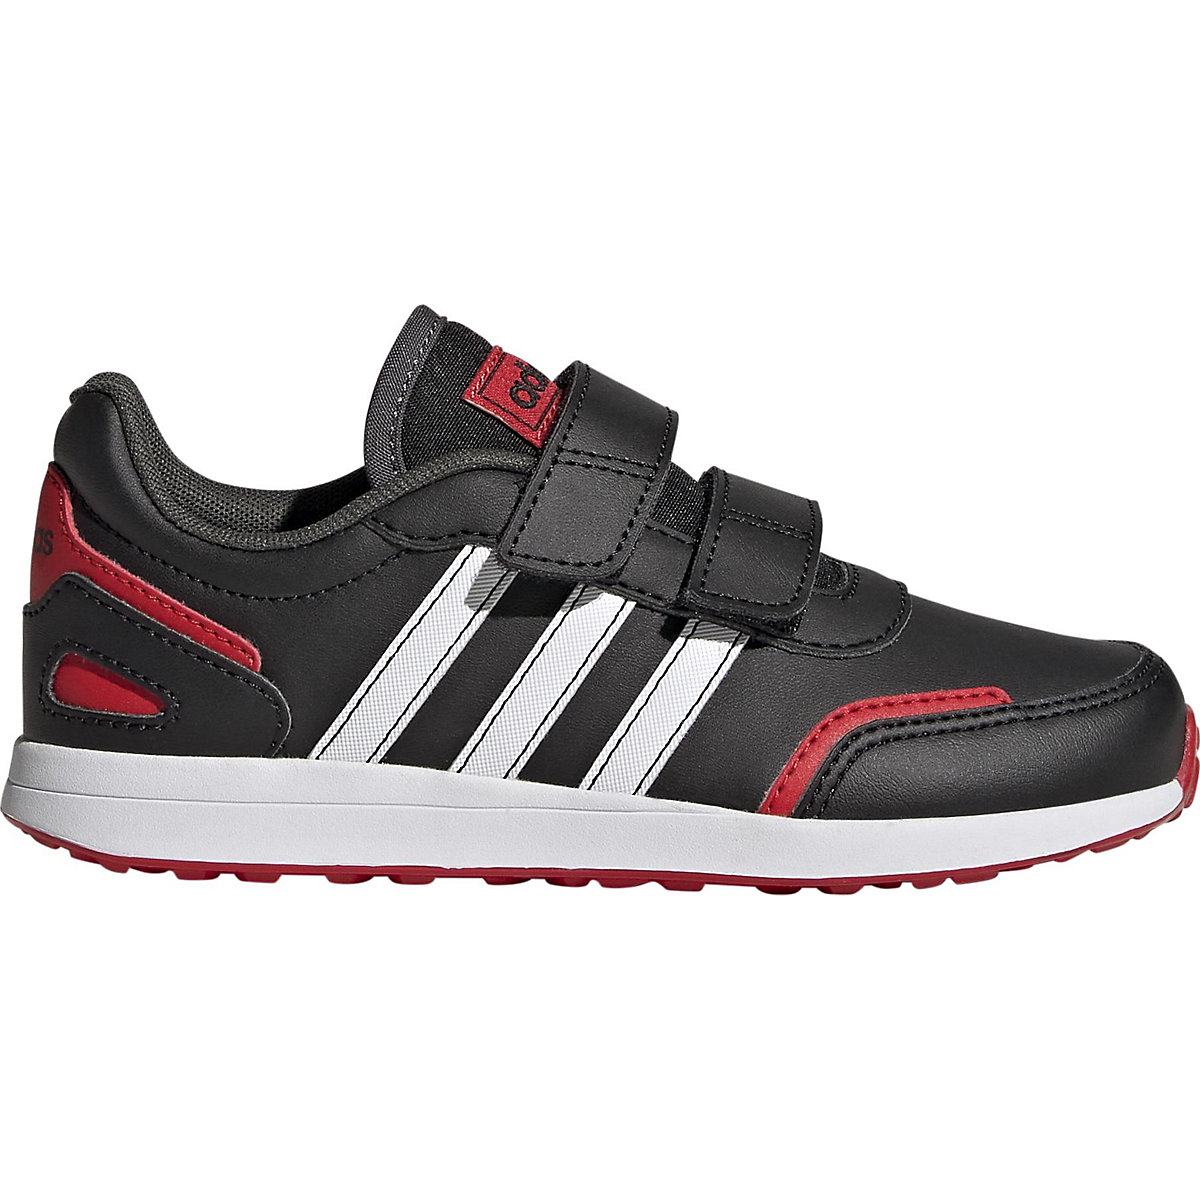 adidas Sneakers Low VS SWITCH 3 CF C für Jungen schwarz/rot